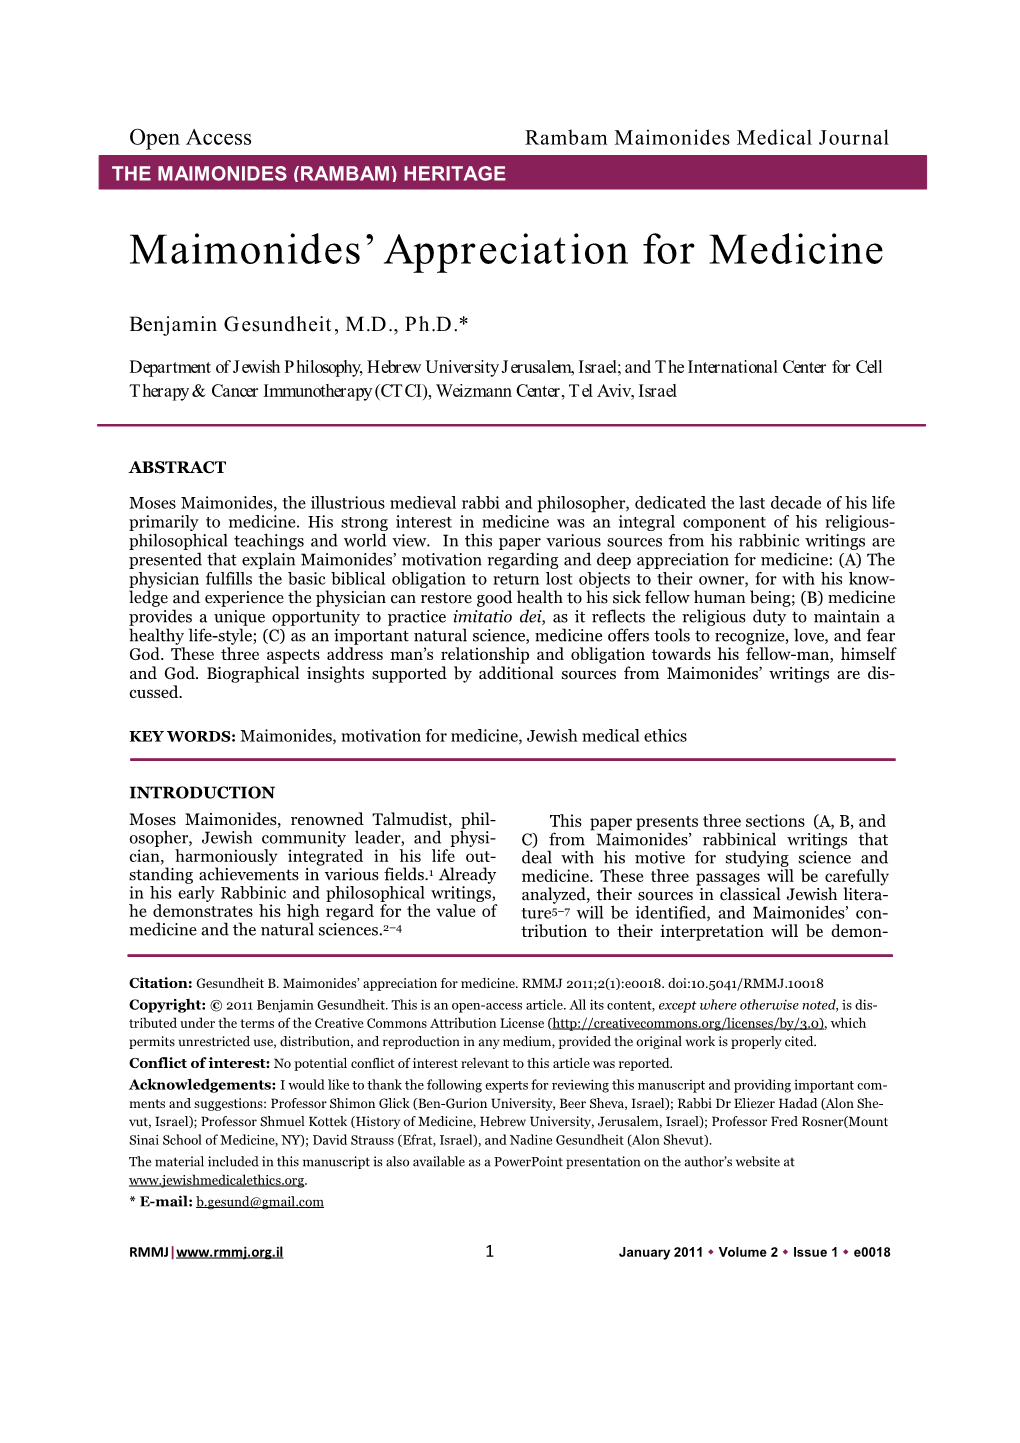 Maimonides' Appreciation for Medicine